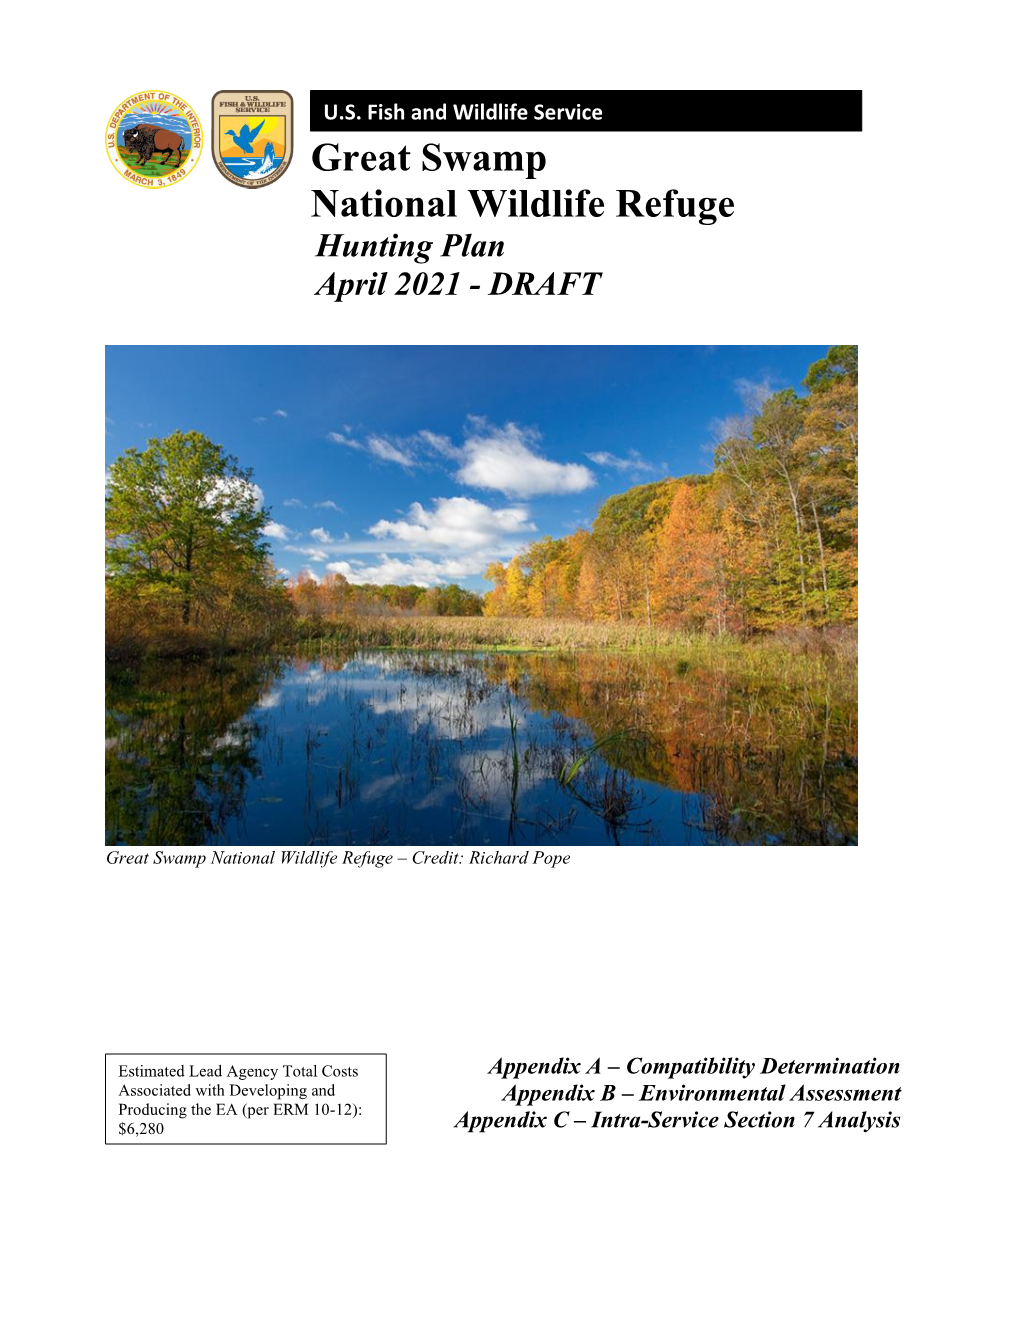 Great Swamp National Wildlife Refuge Hunting Plan April 2021 - DRAFT